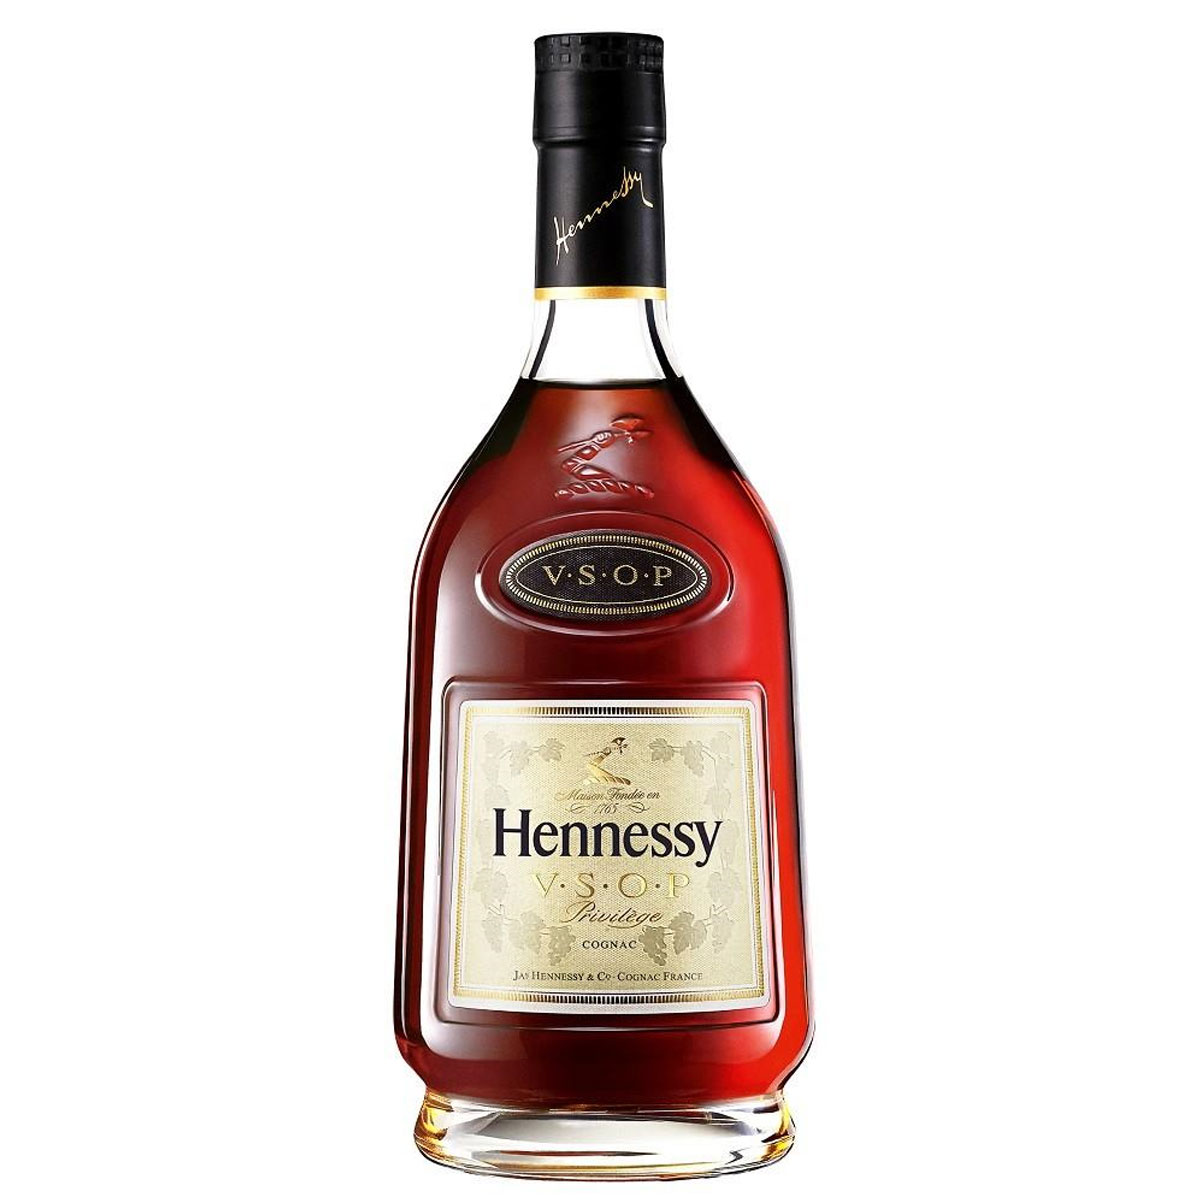 a bottle of hennessy v.s.o.p cognac